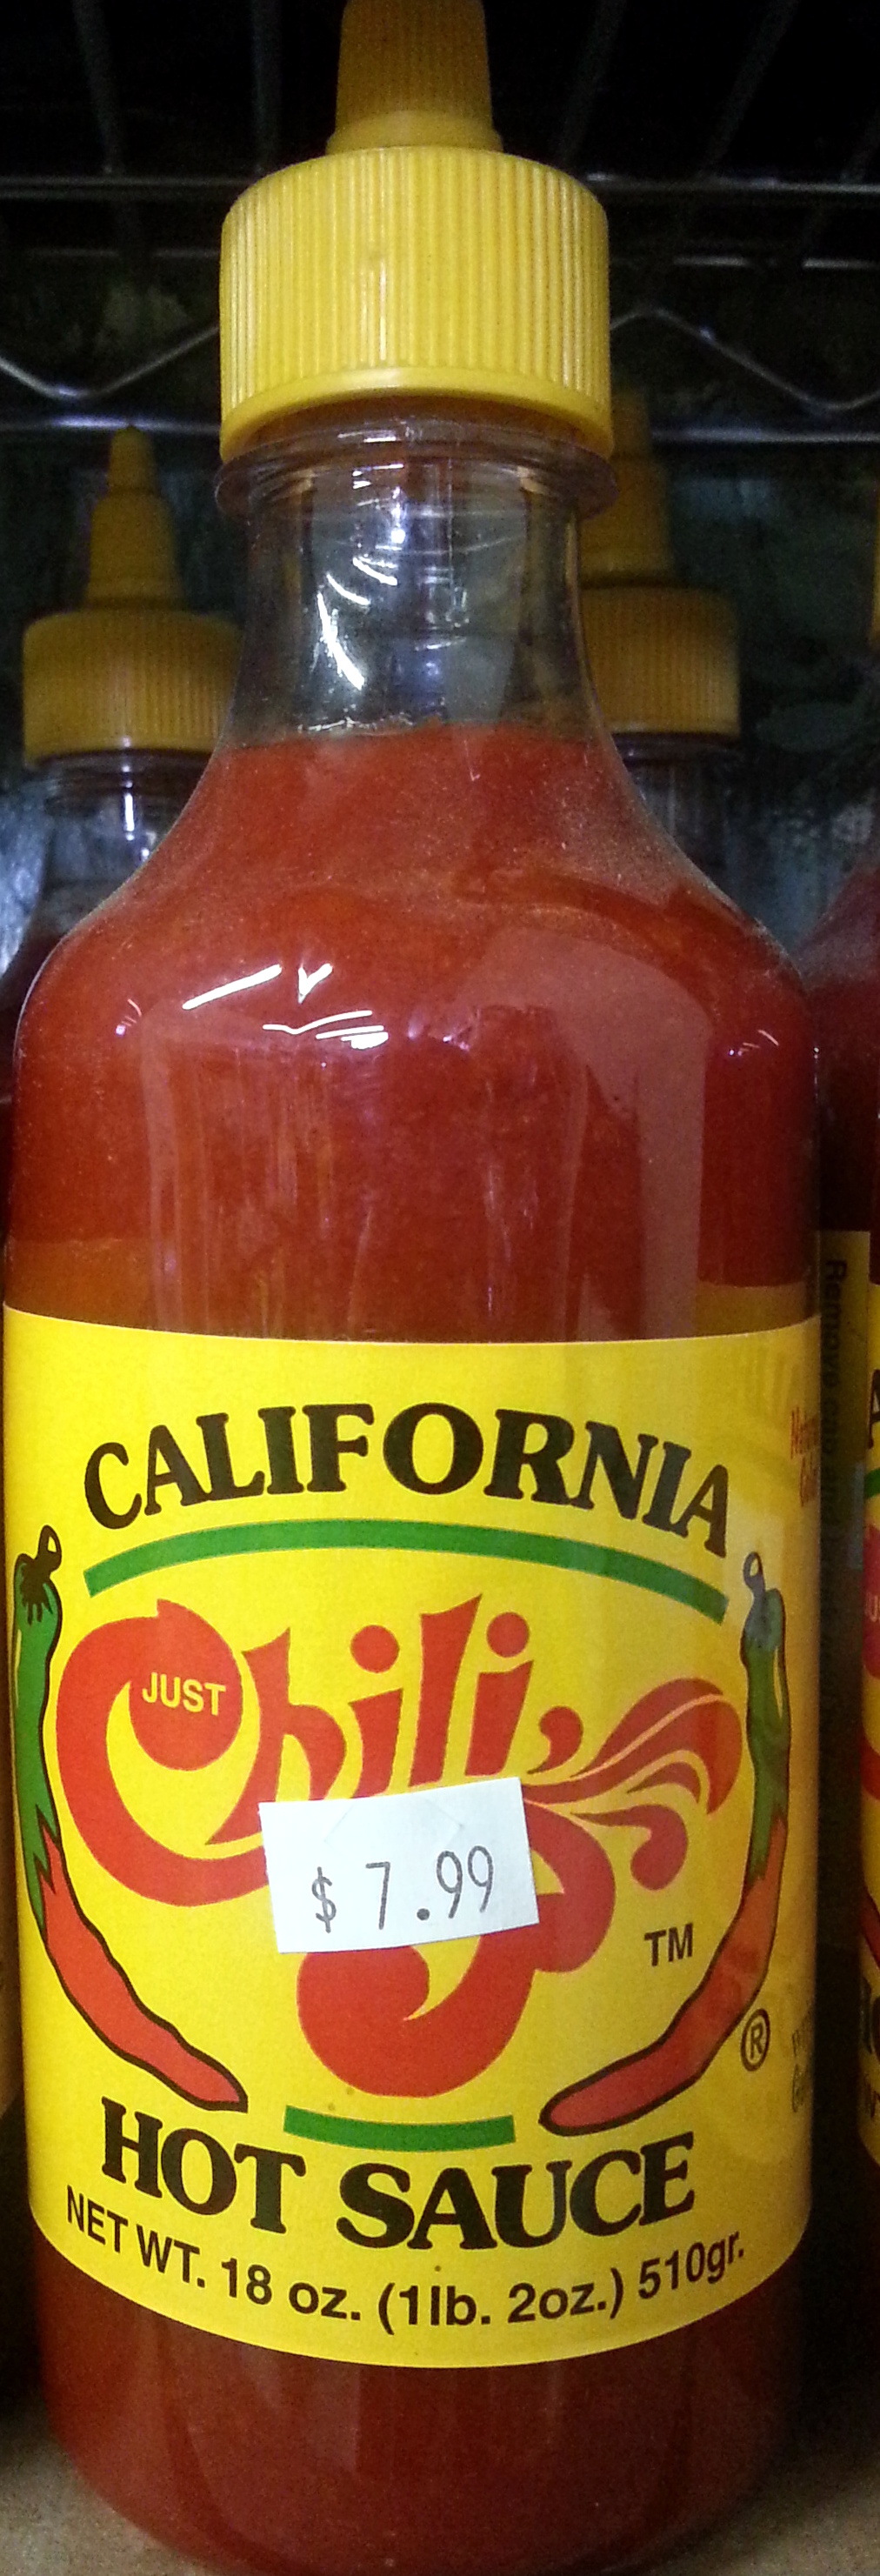 California Chili Hot Sauce - Product